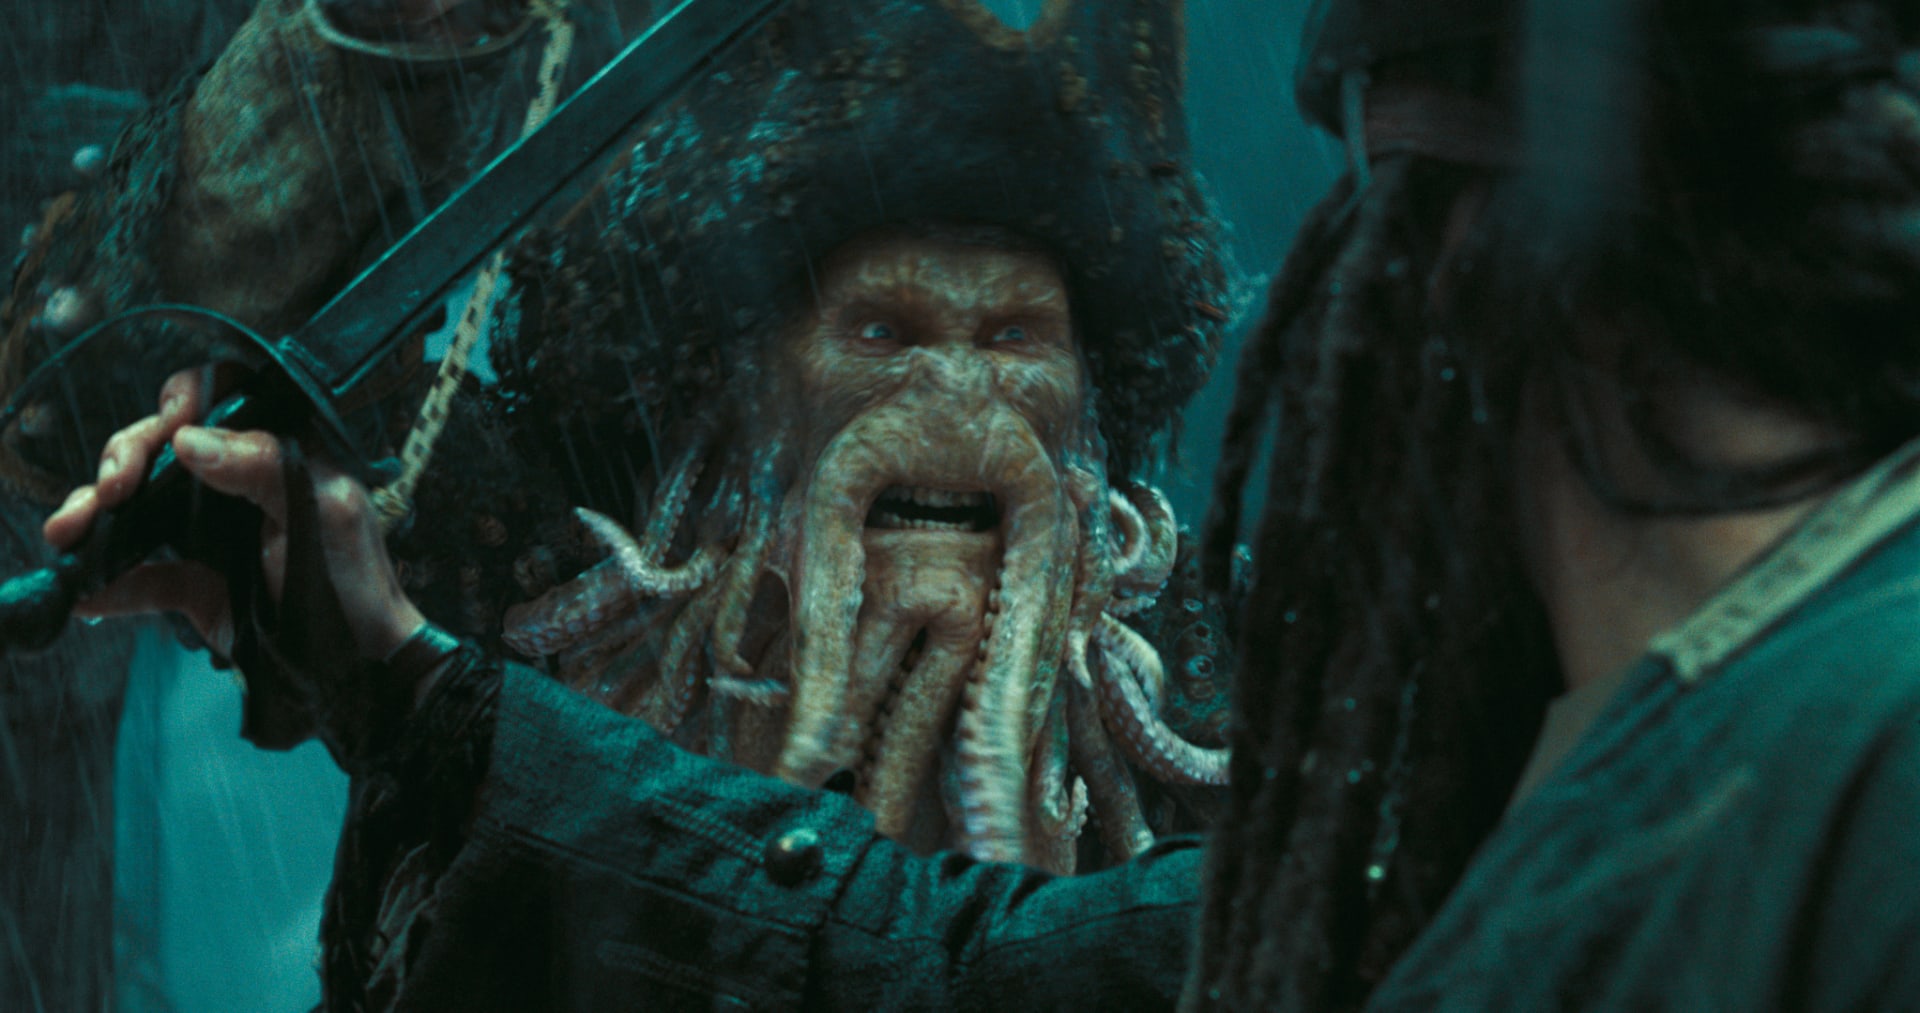 Davy Jones vs. Jack Sparrow